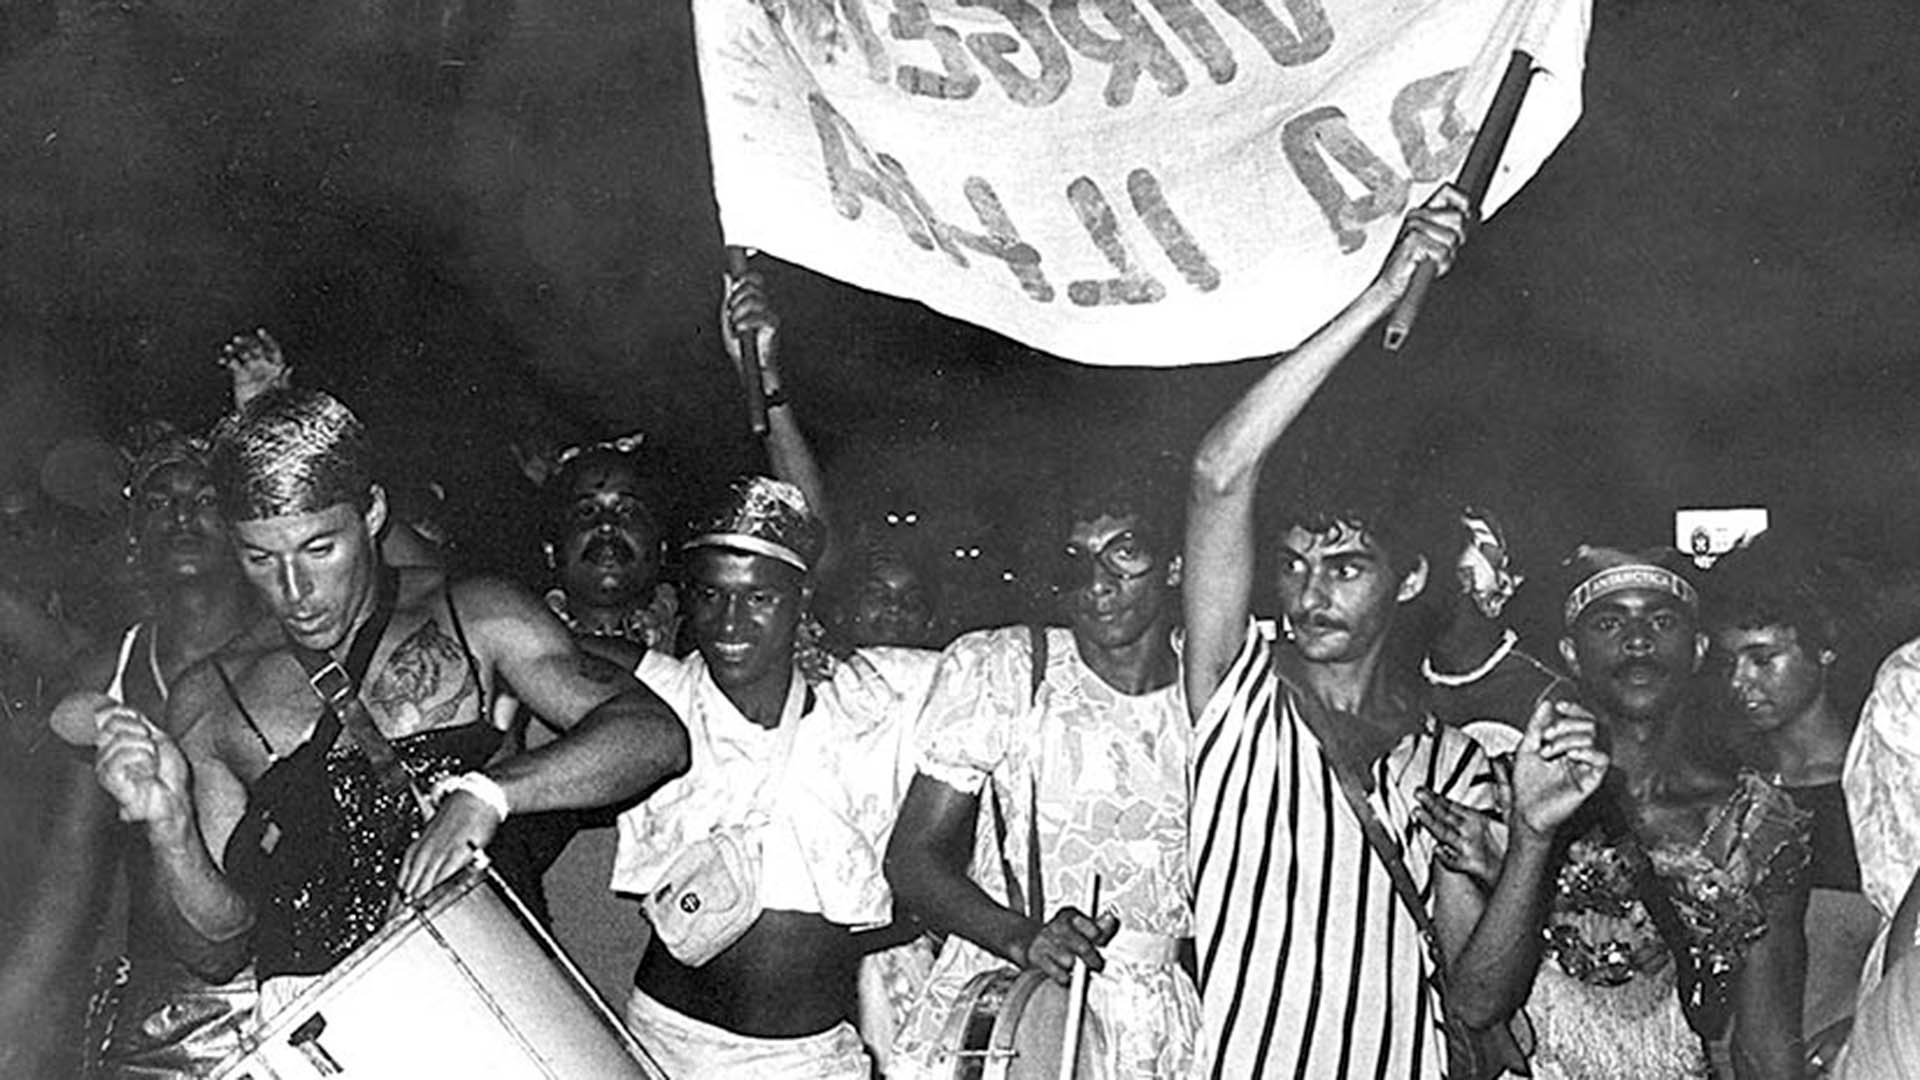 1989 - Bloco "As Virgens de Monte Belo" - Vitória 